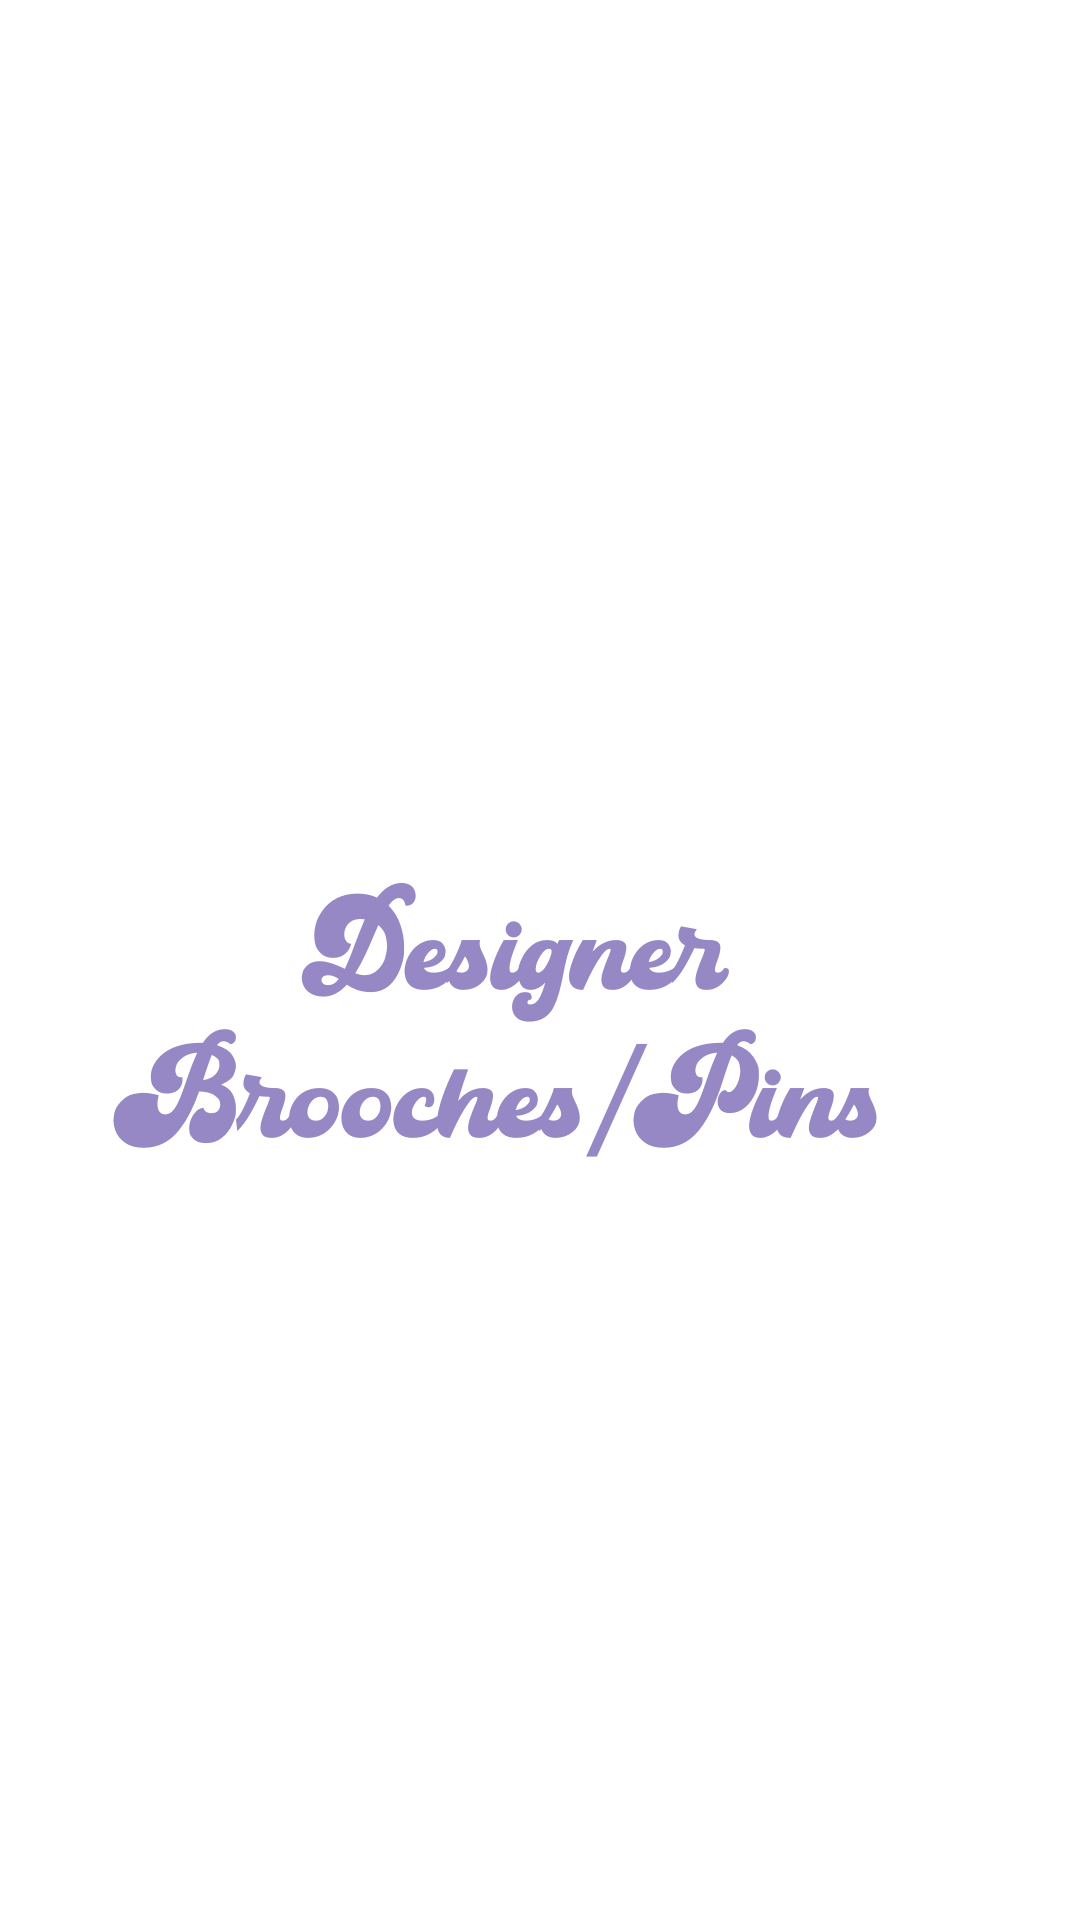 Brooches/ Pins